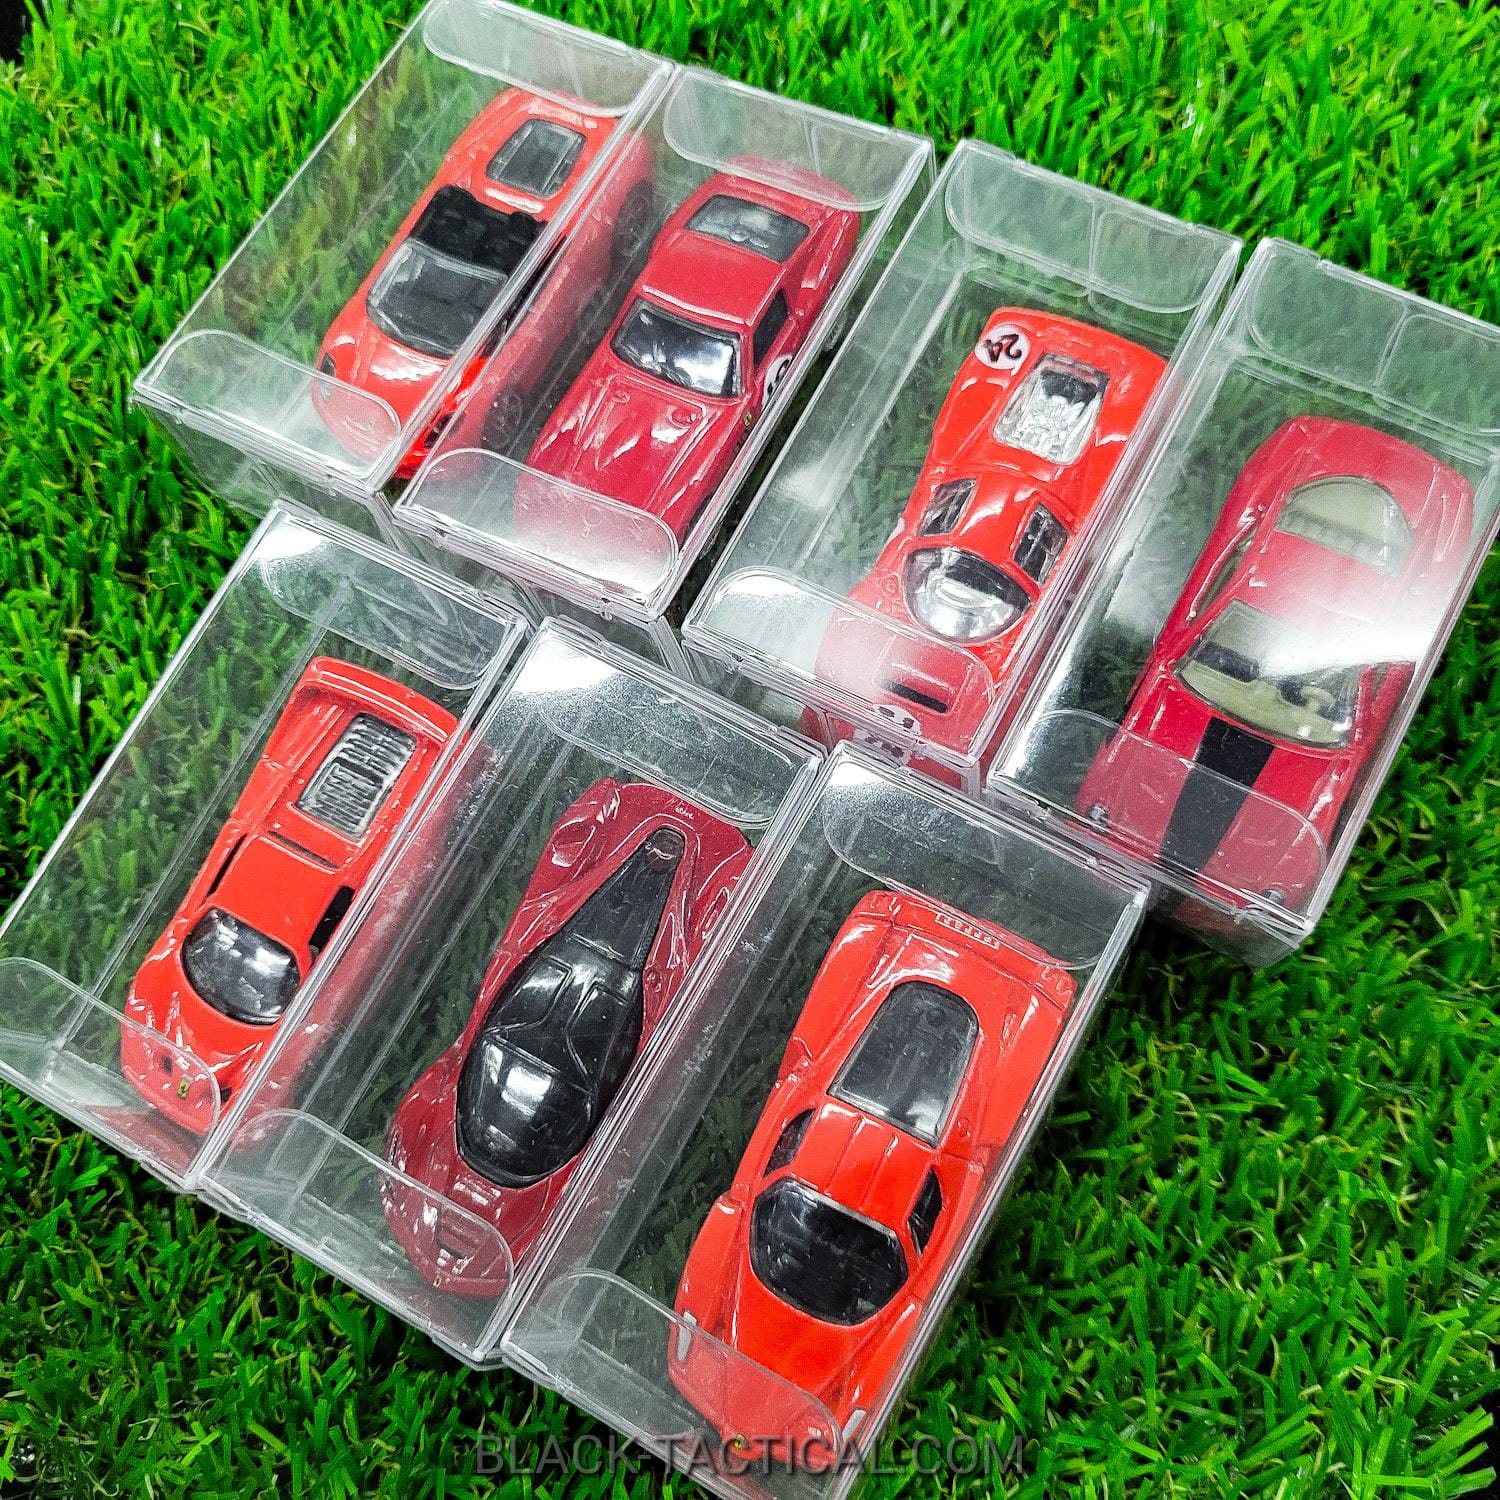 Hot Wheels - Red Ferrari Cars (No Packaging/Assorted)